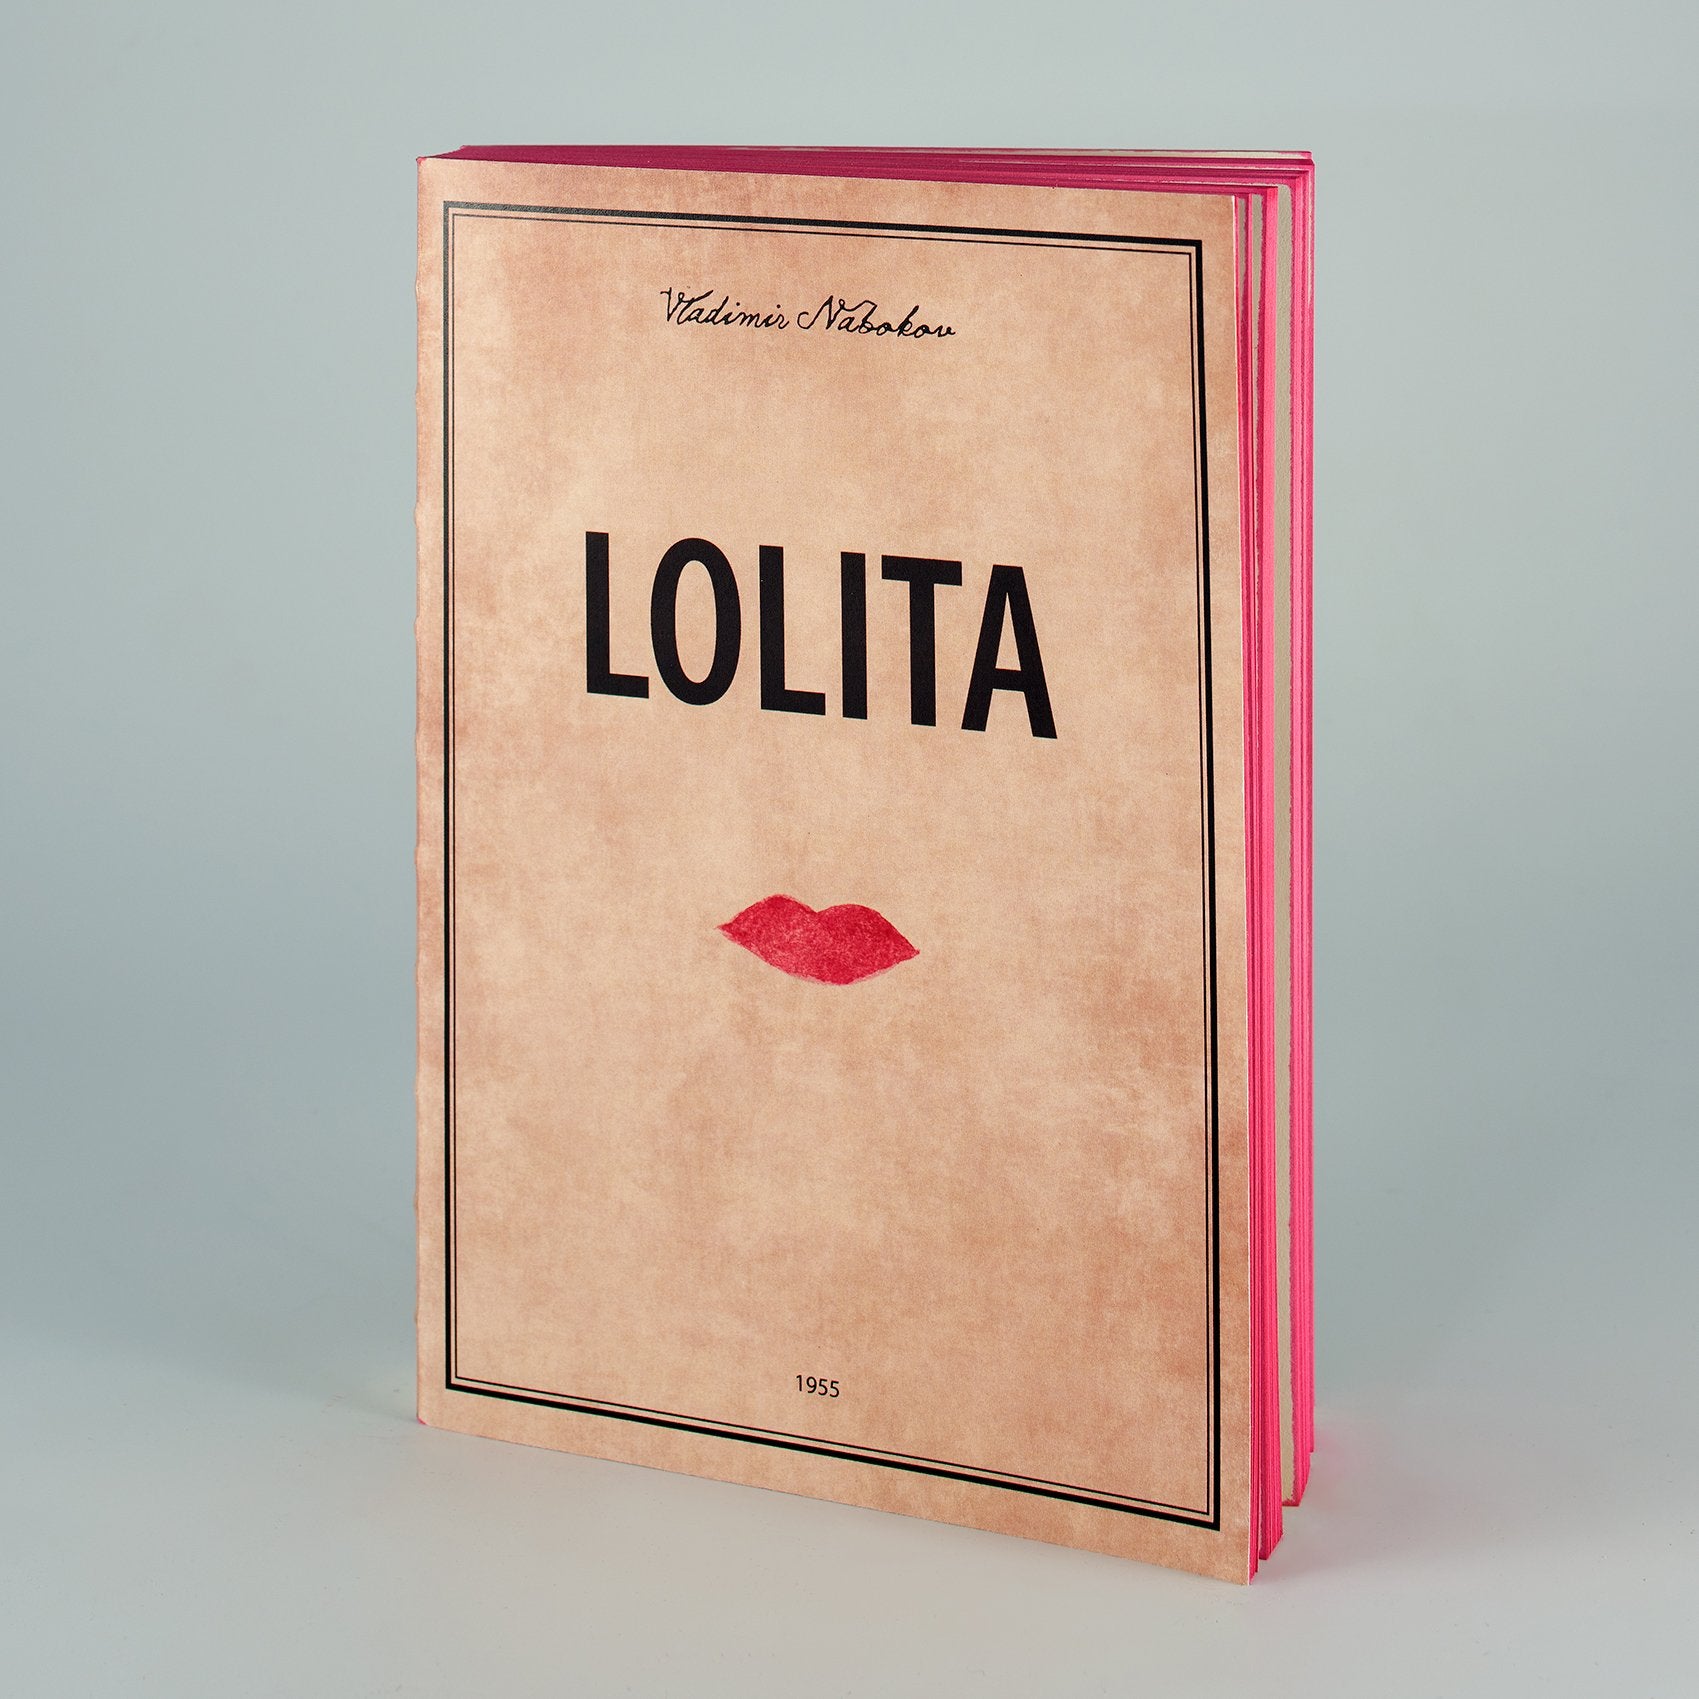 Se LOLITA - NOTESBOG - LIBRI MUTI - notesbog - Slow Design - StudioBuus hos StudioBuus.dk